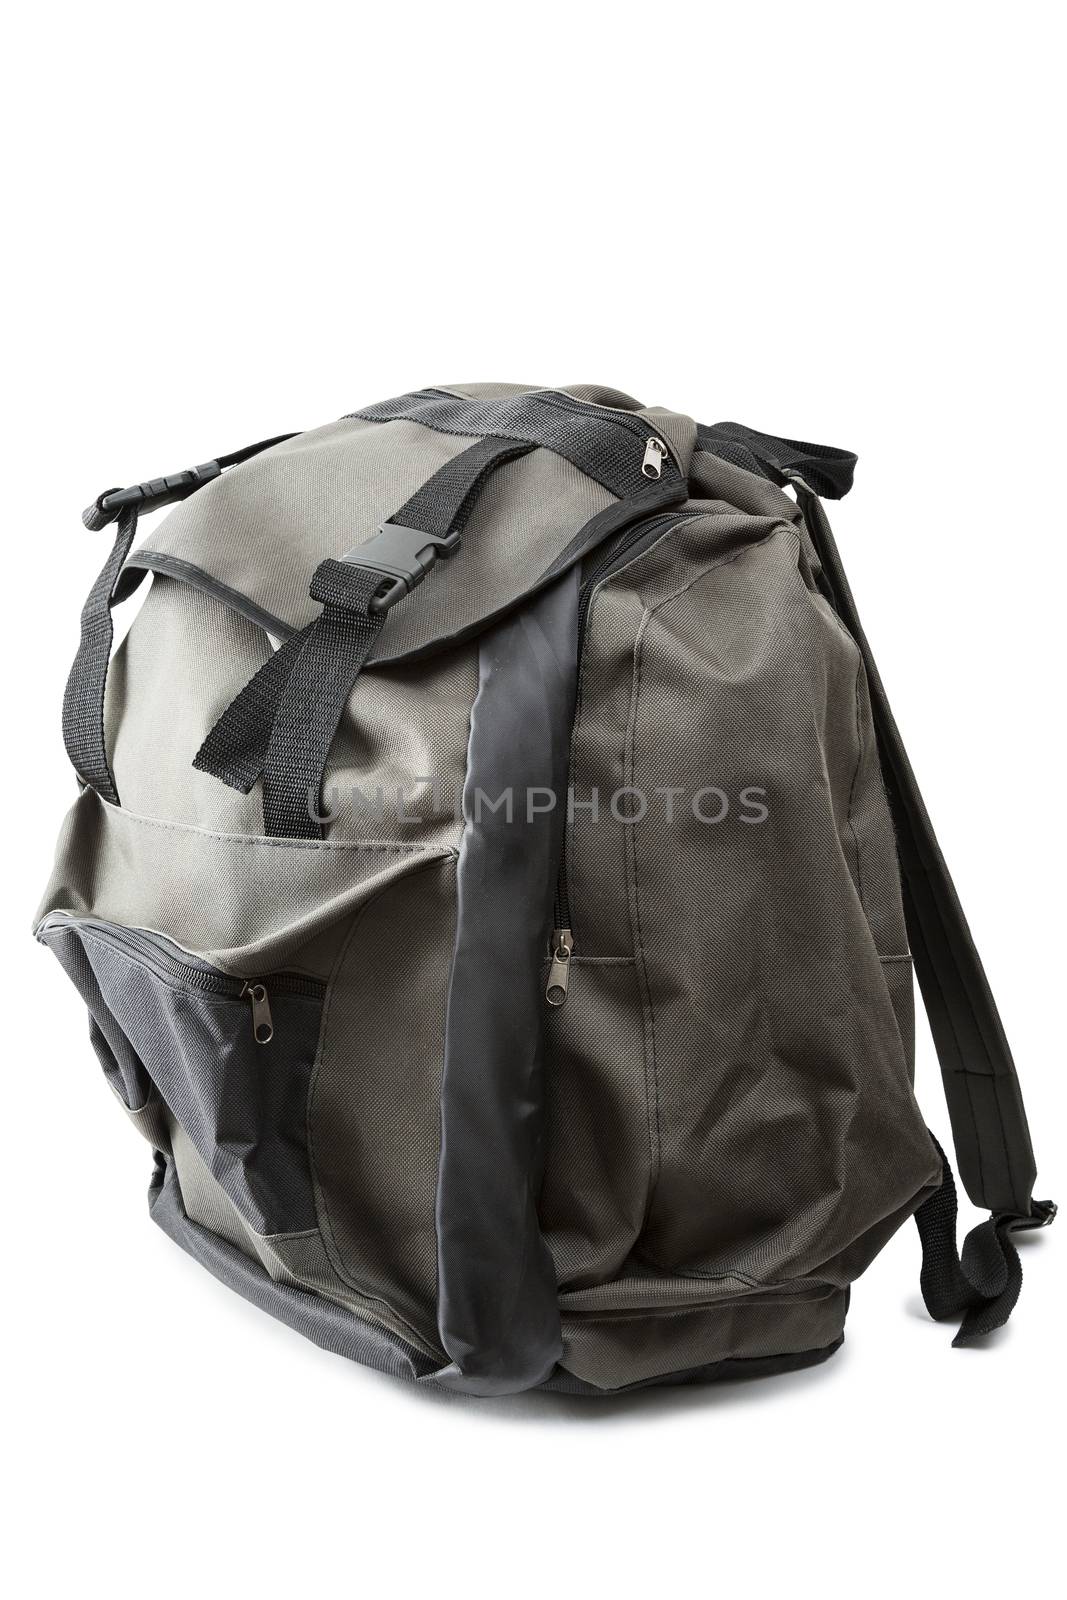 Backpack by Ohotnik